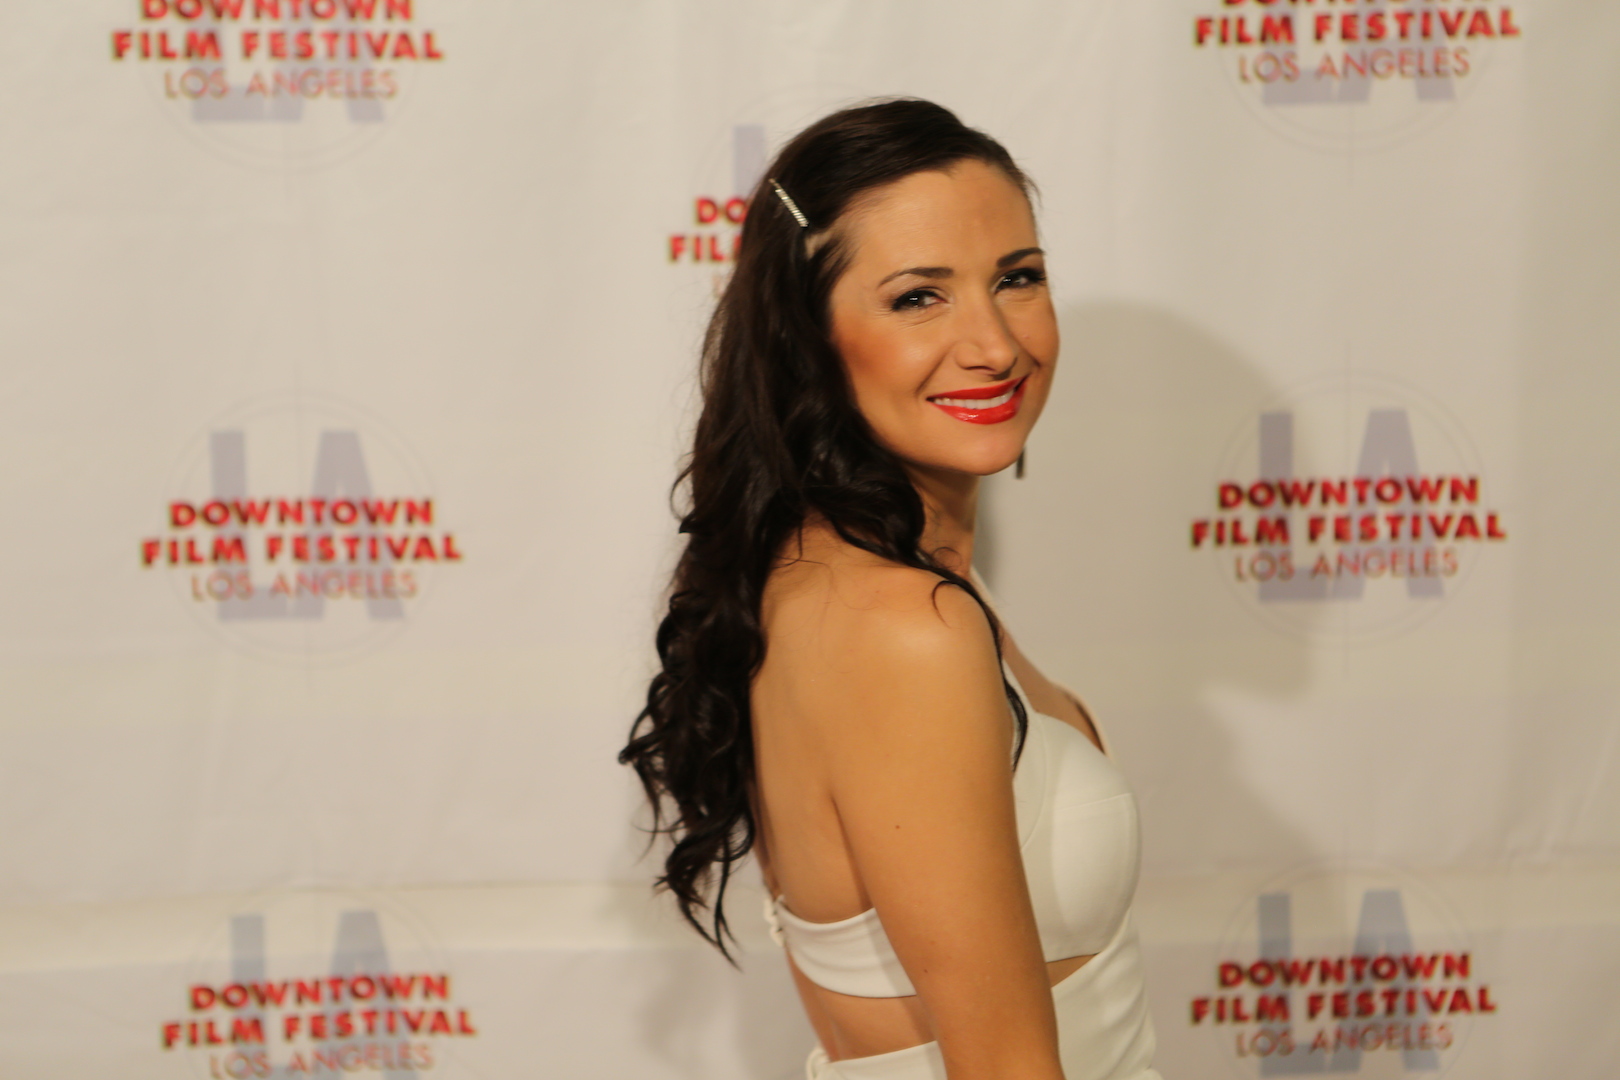 2014 Downtown Film Festival Los Angeles